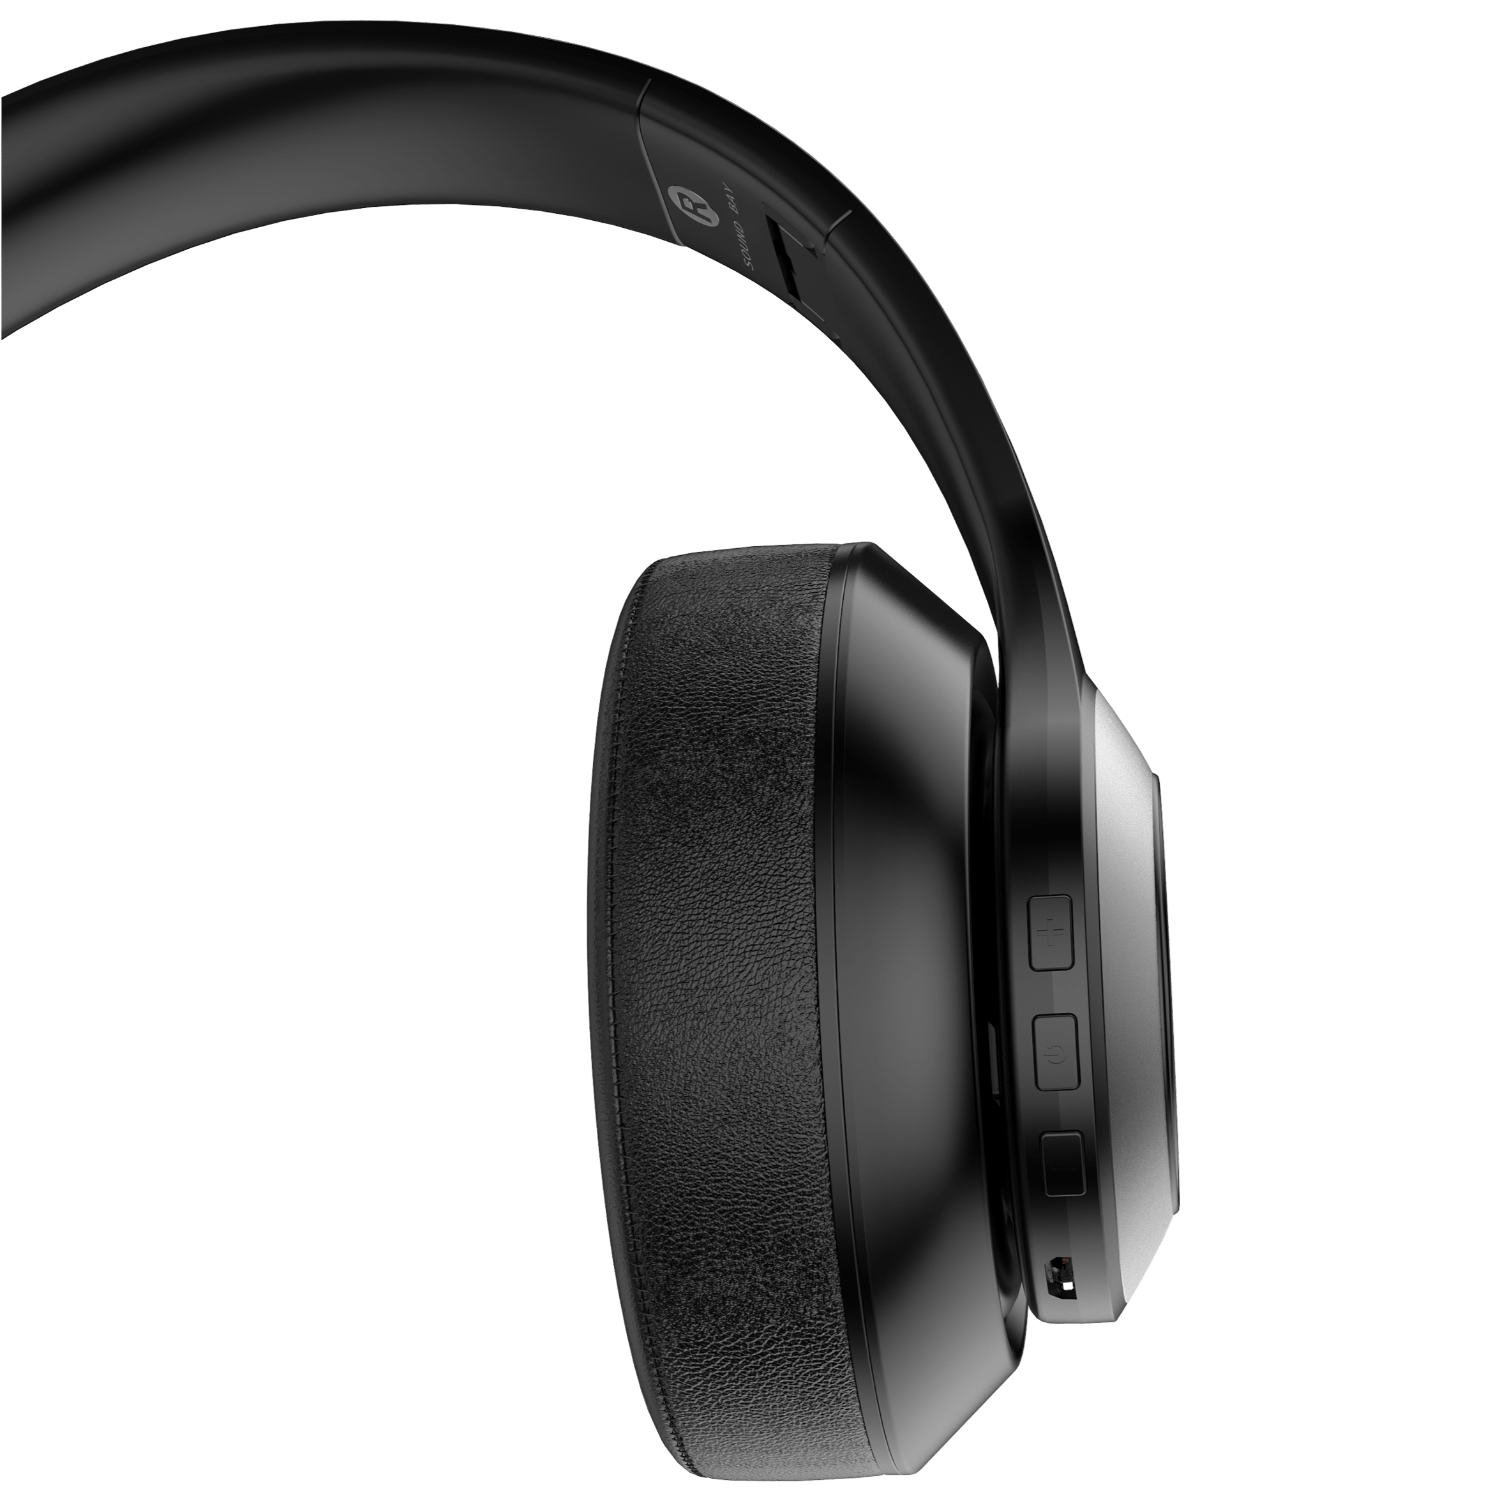 Model X Bluetooth Headphones by Sound Bay